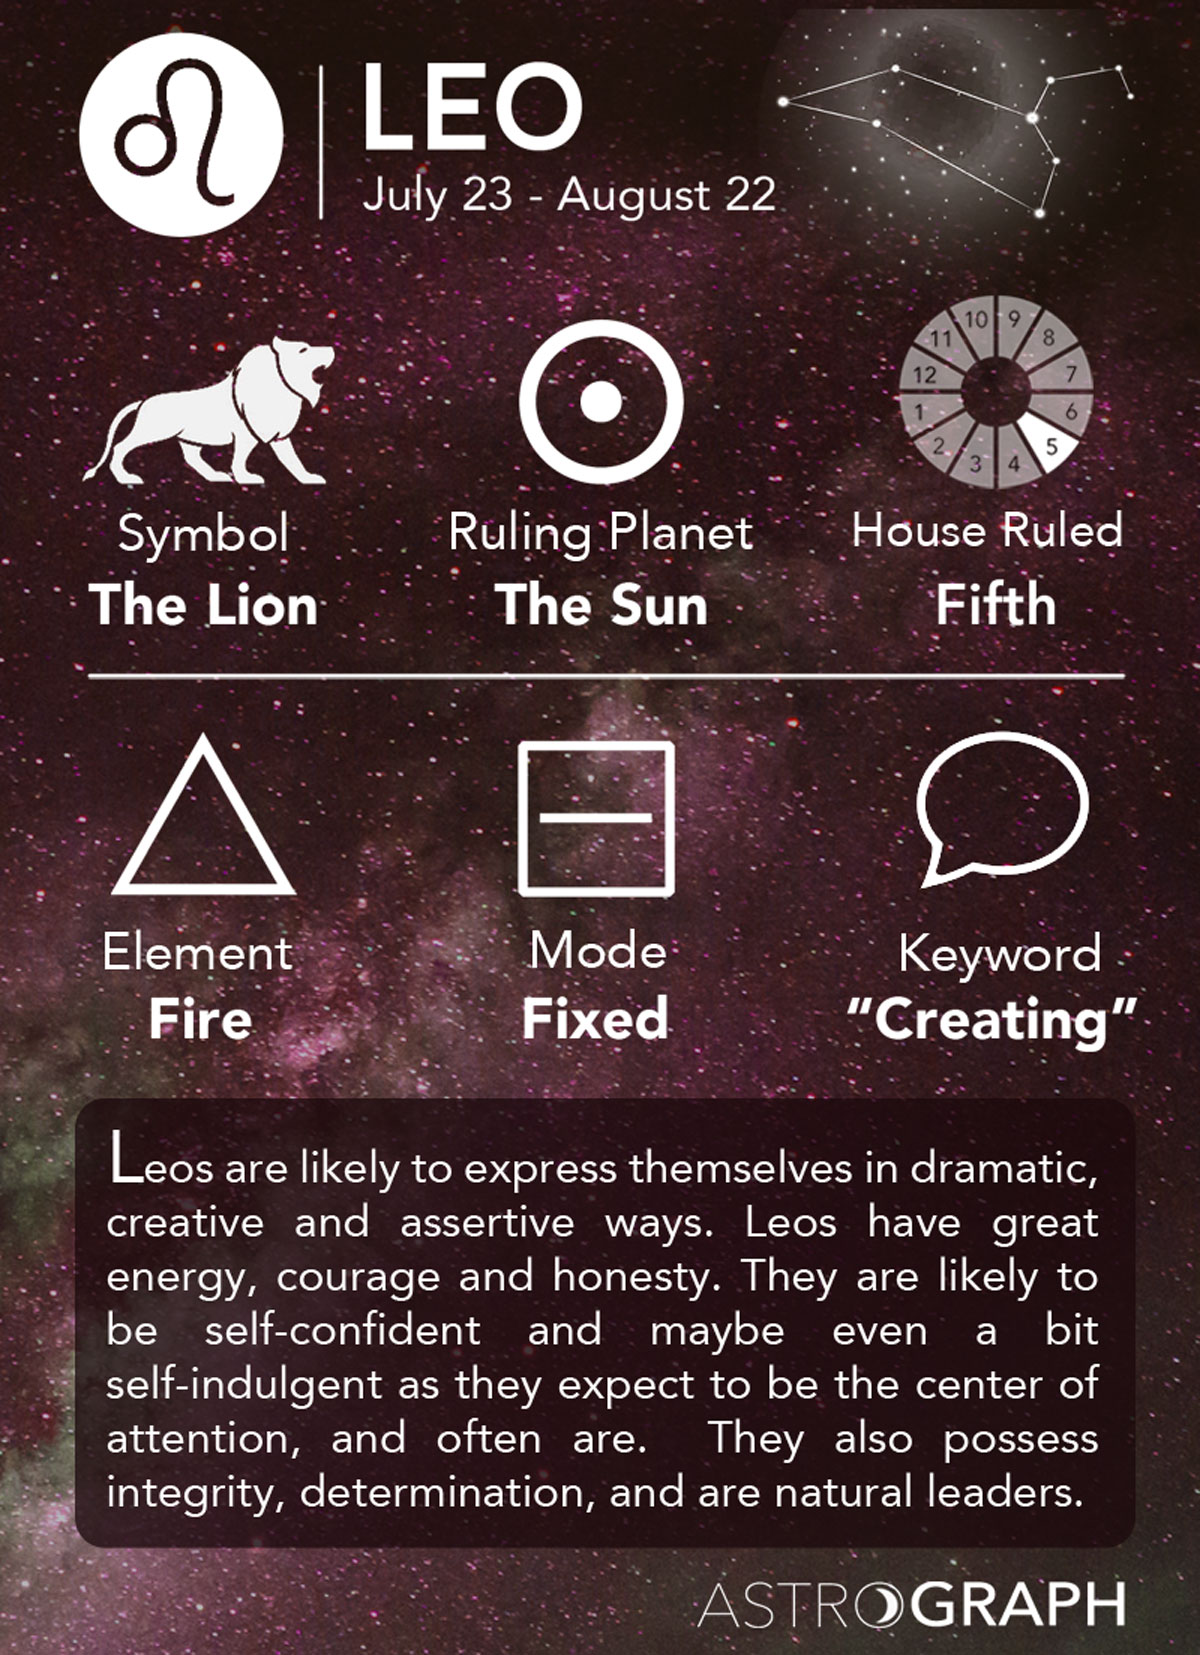 August 22 Zodiac Sign